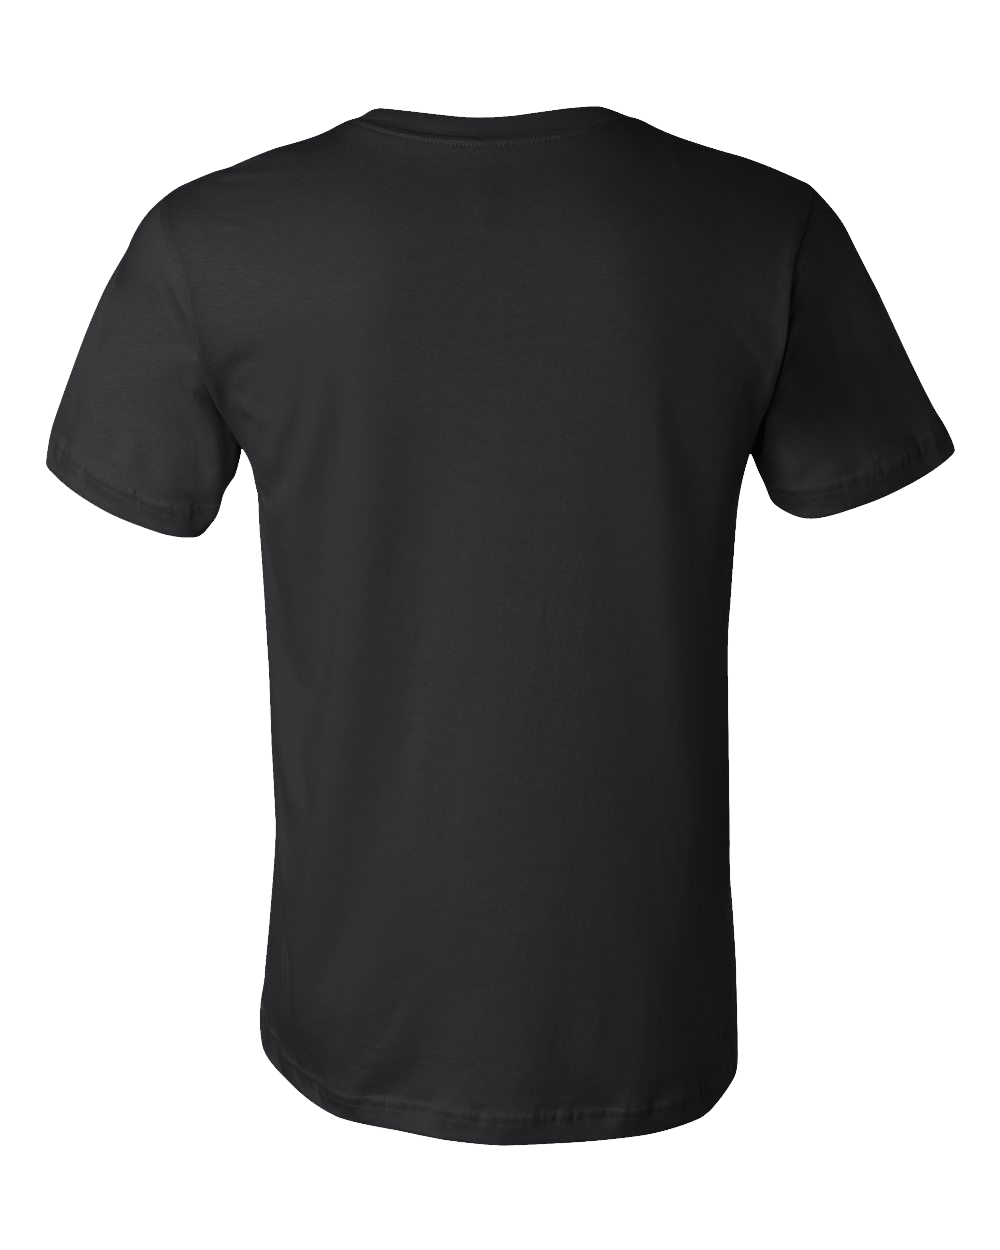 Standard Black Pontotoc, MS | Retro, Vintage Style Mississippi Pride  T-shirt